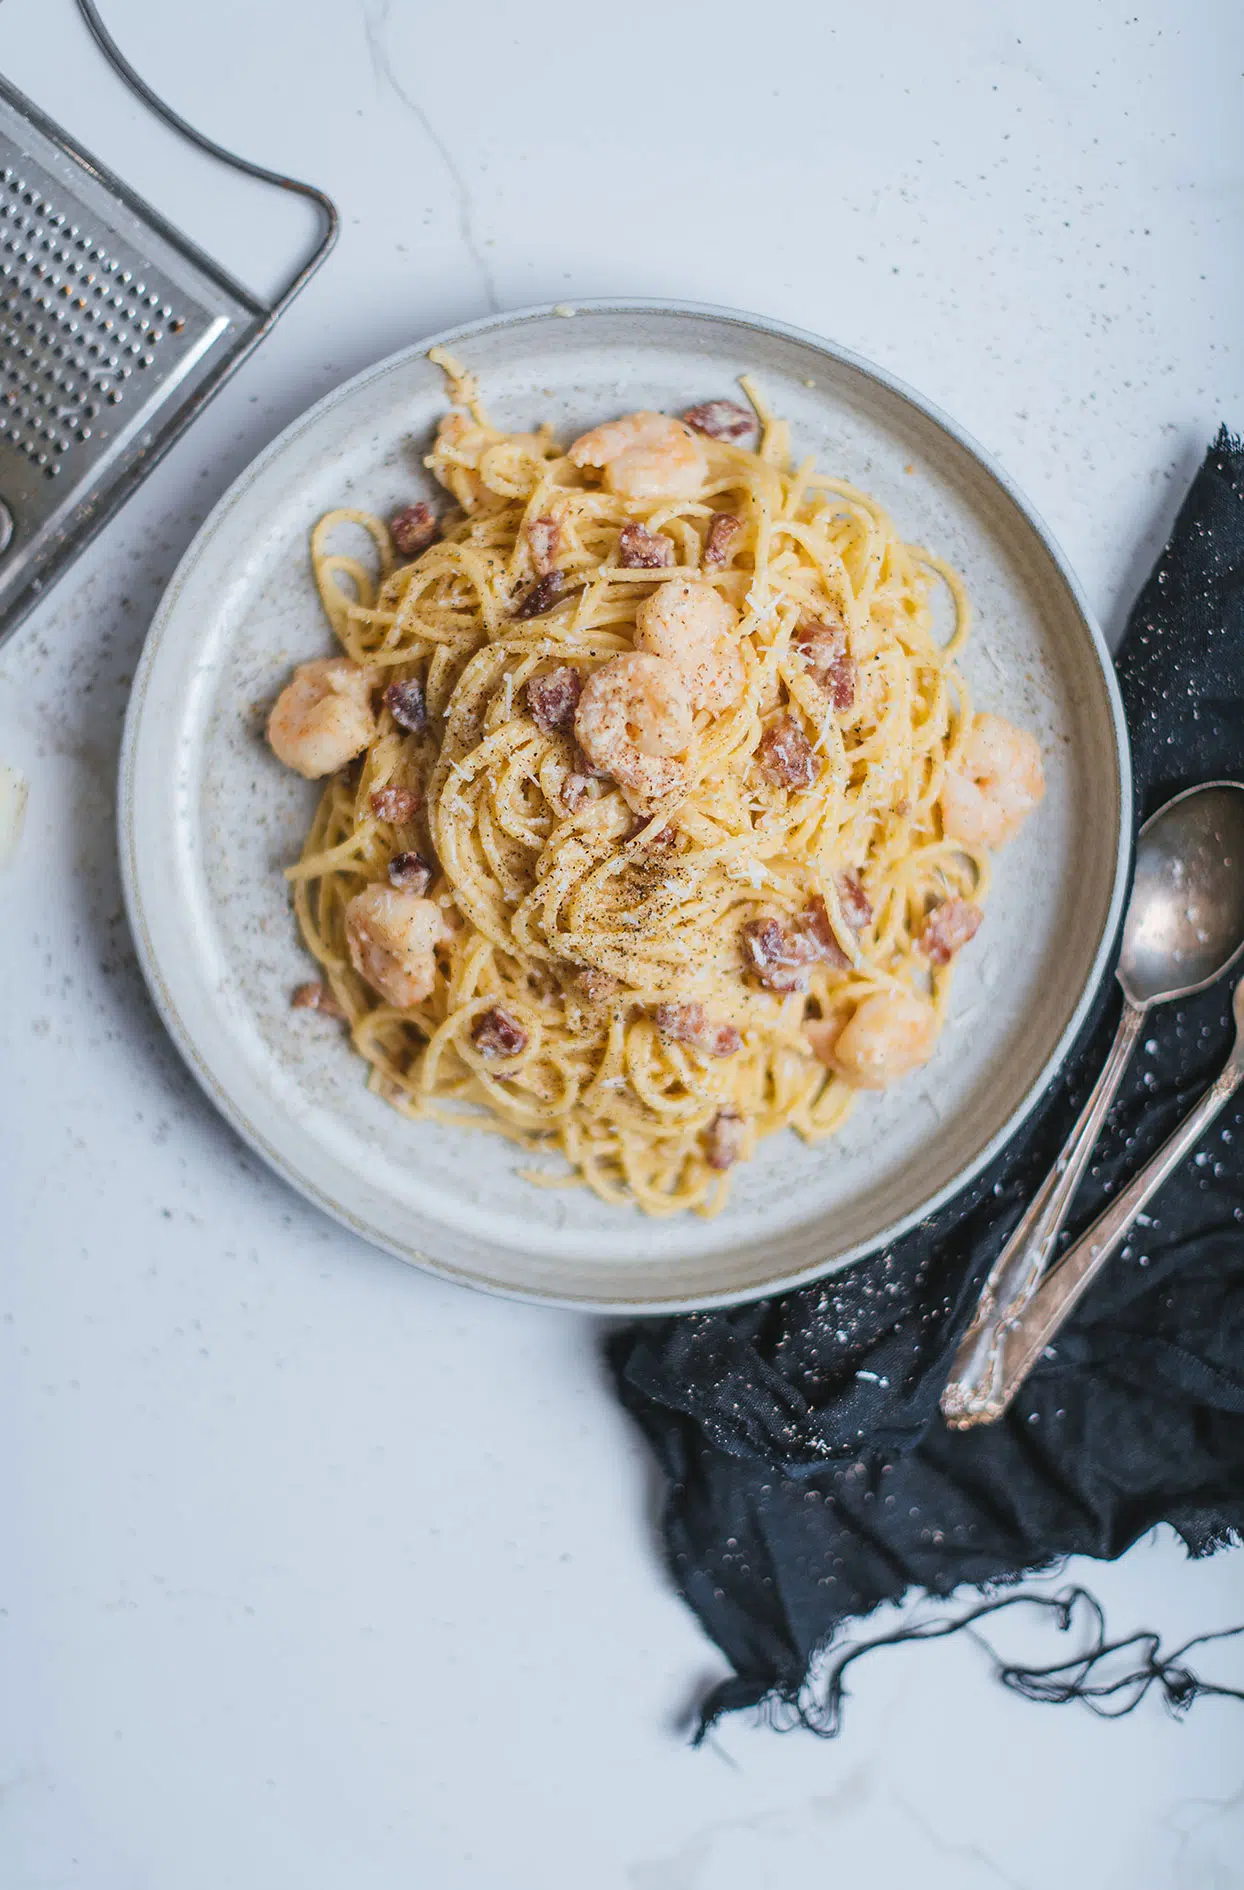 Spaghetti carbonara with shrimps